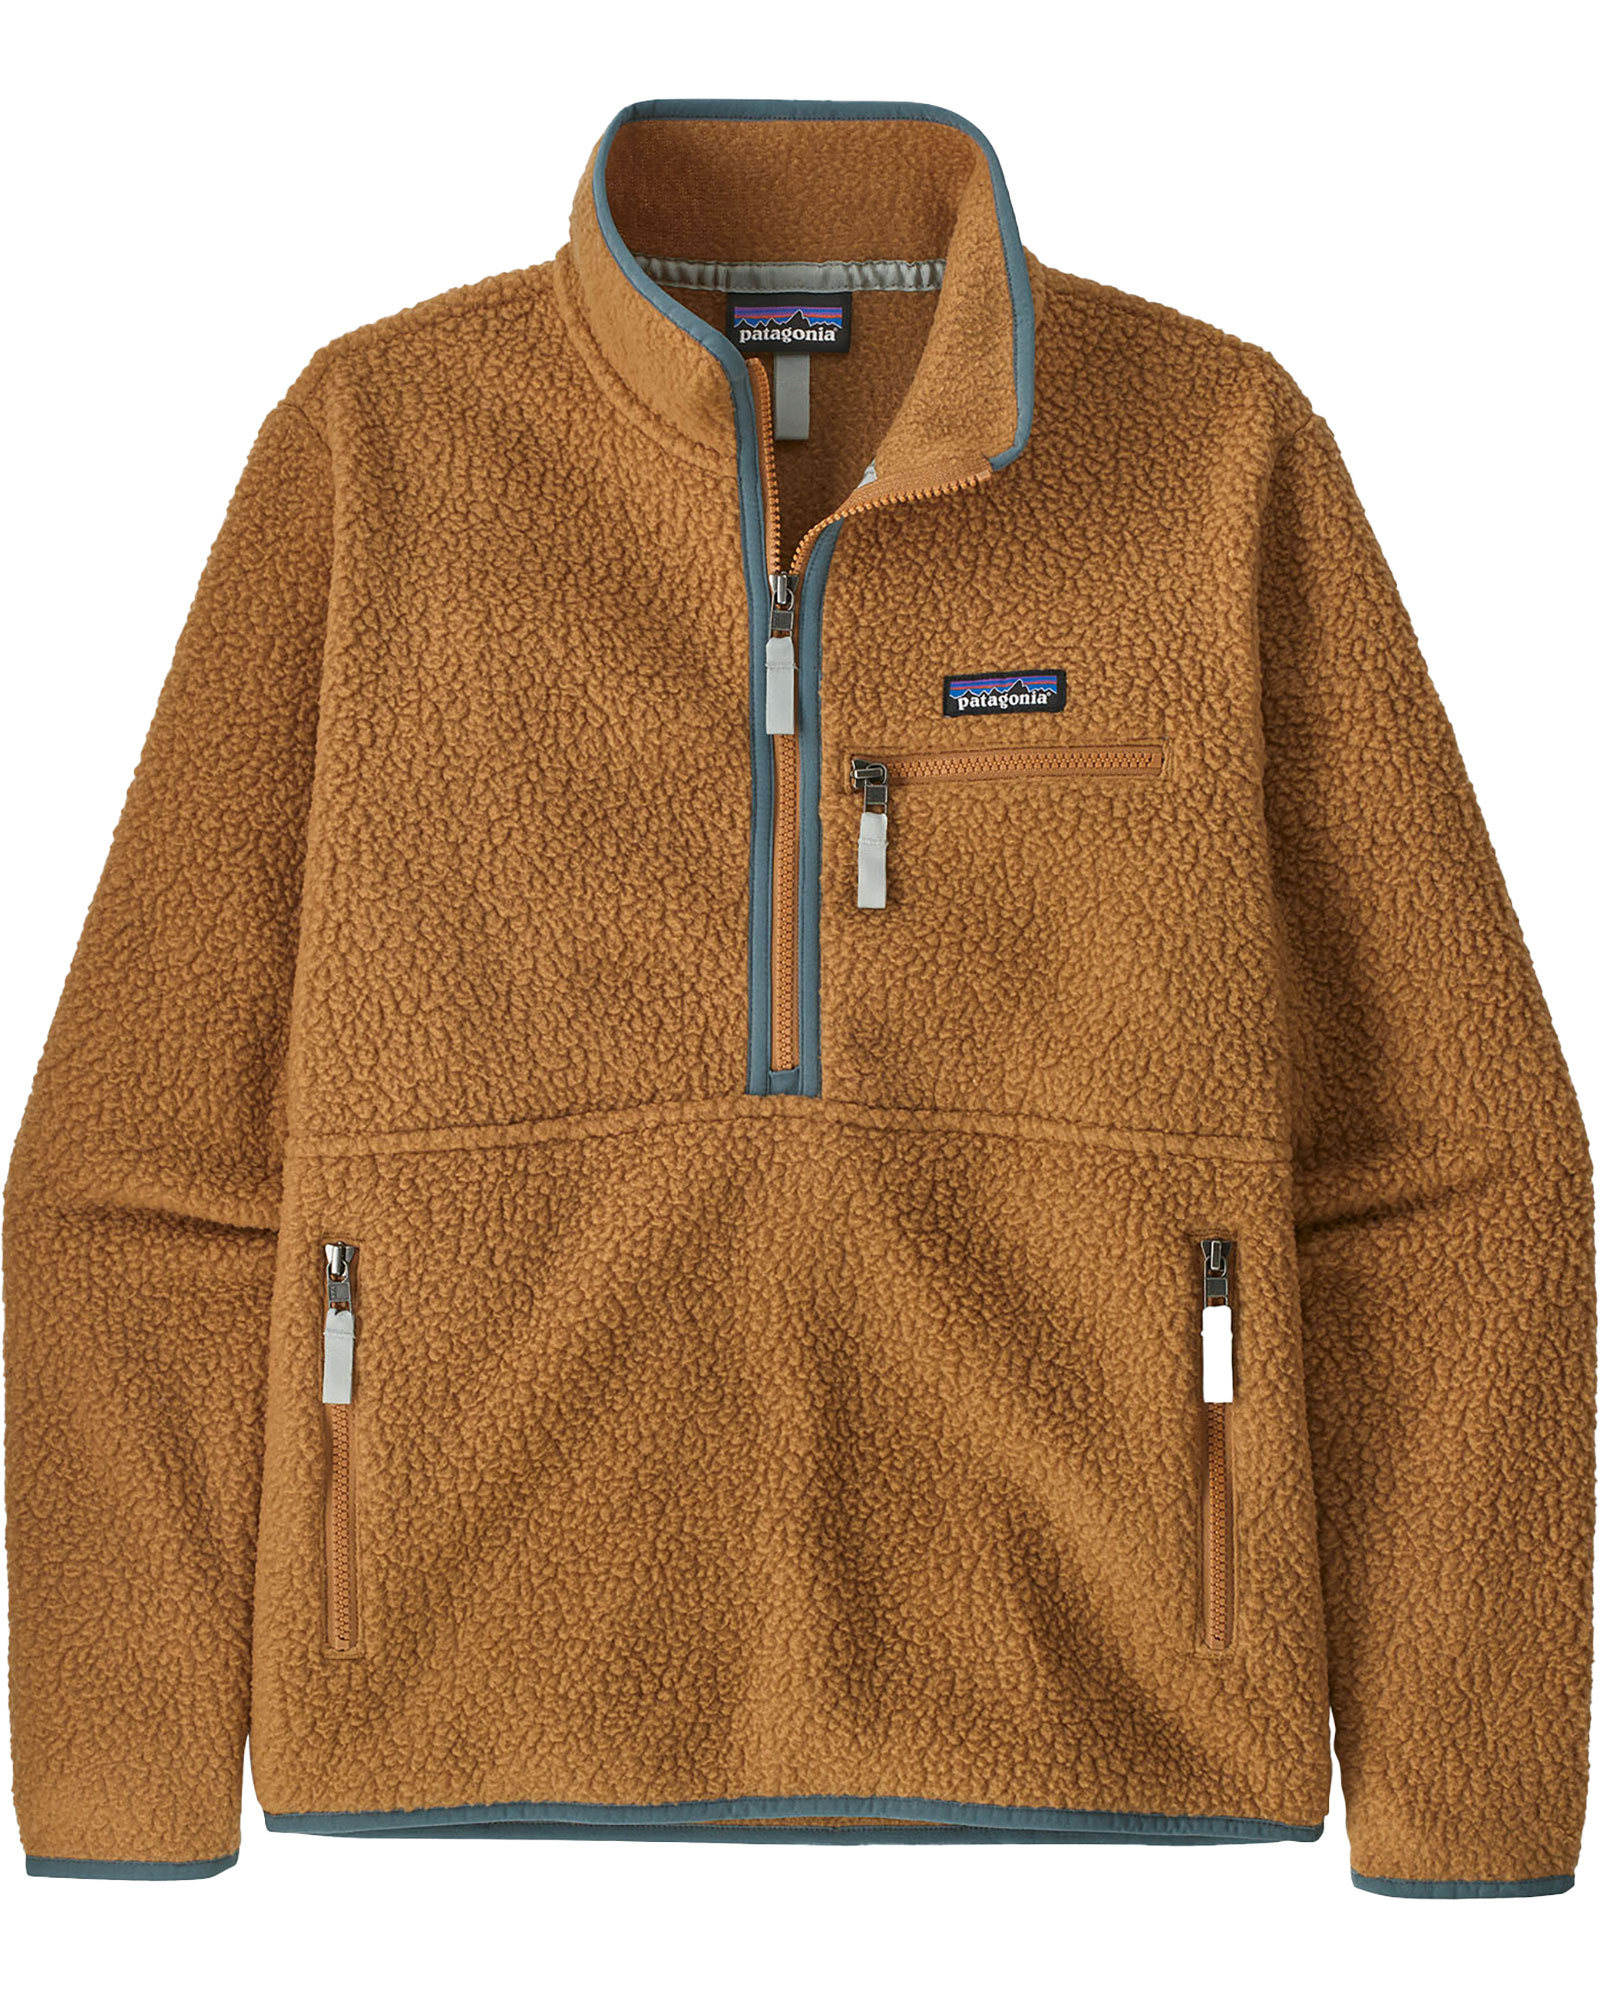 Patagonia Retro Pile Marsupial Women’s Fleece Jacket - Nest Brown w/Nouveau Green S